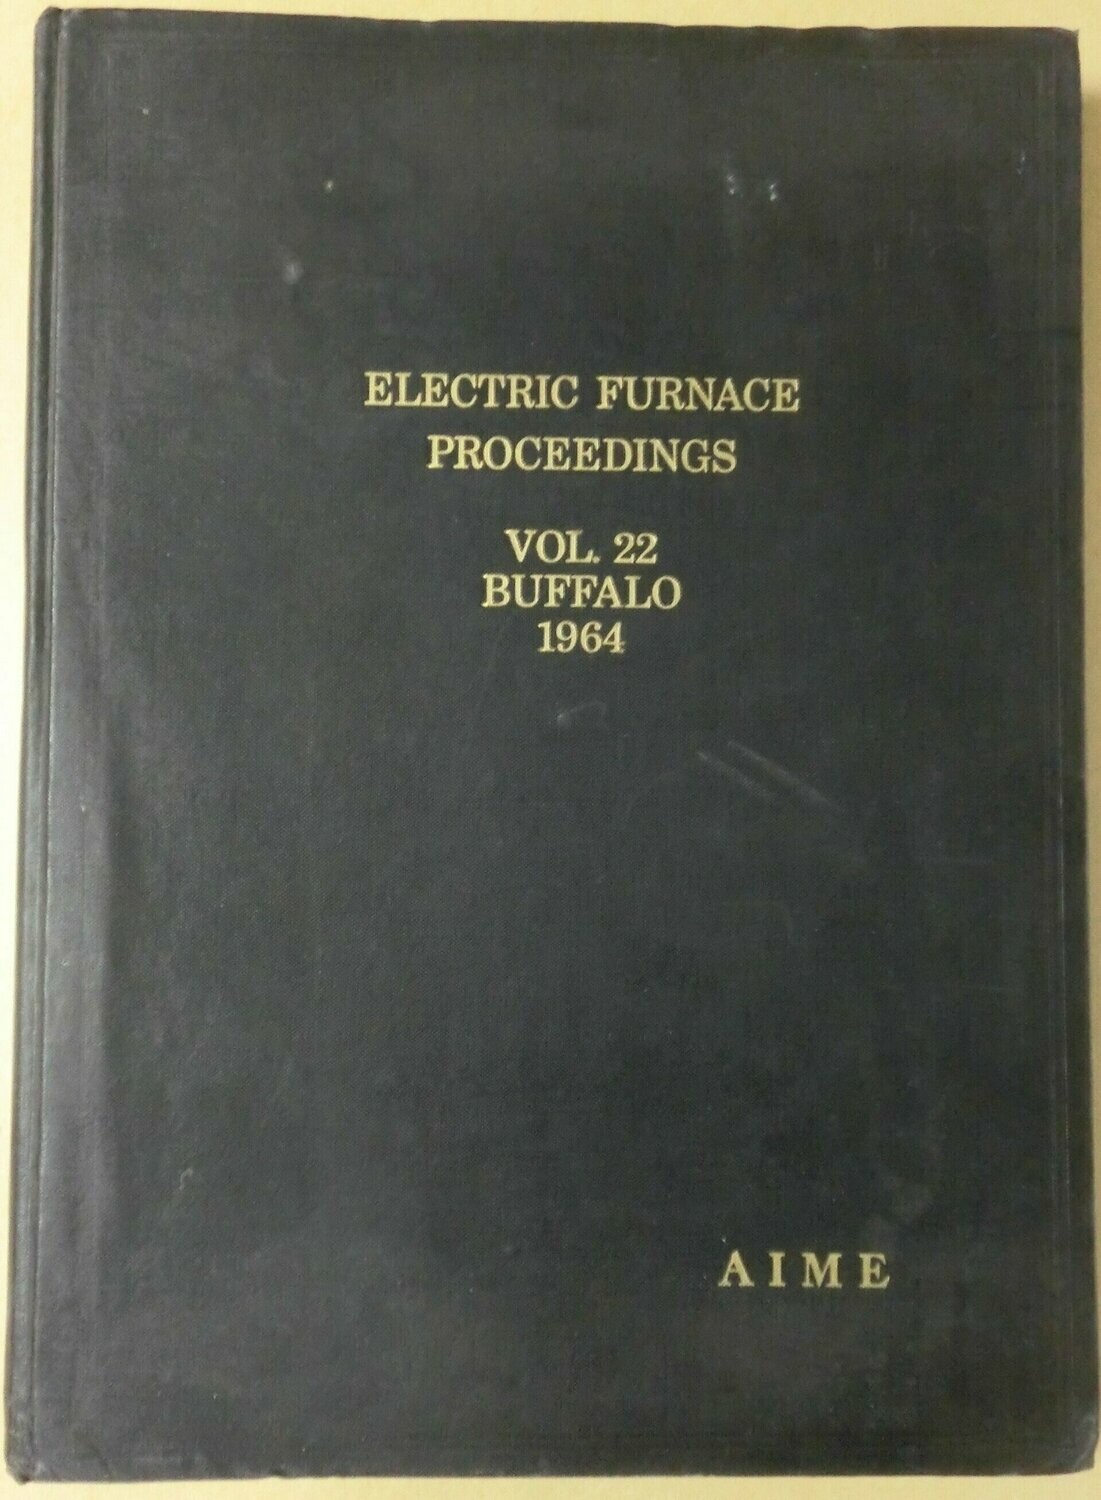 Electric furnace proceedings vol 22 Buffalo 1964